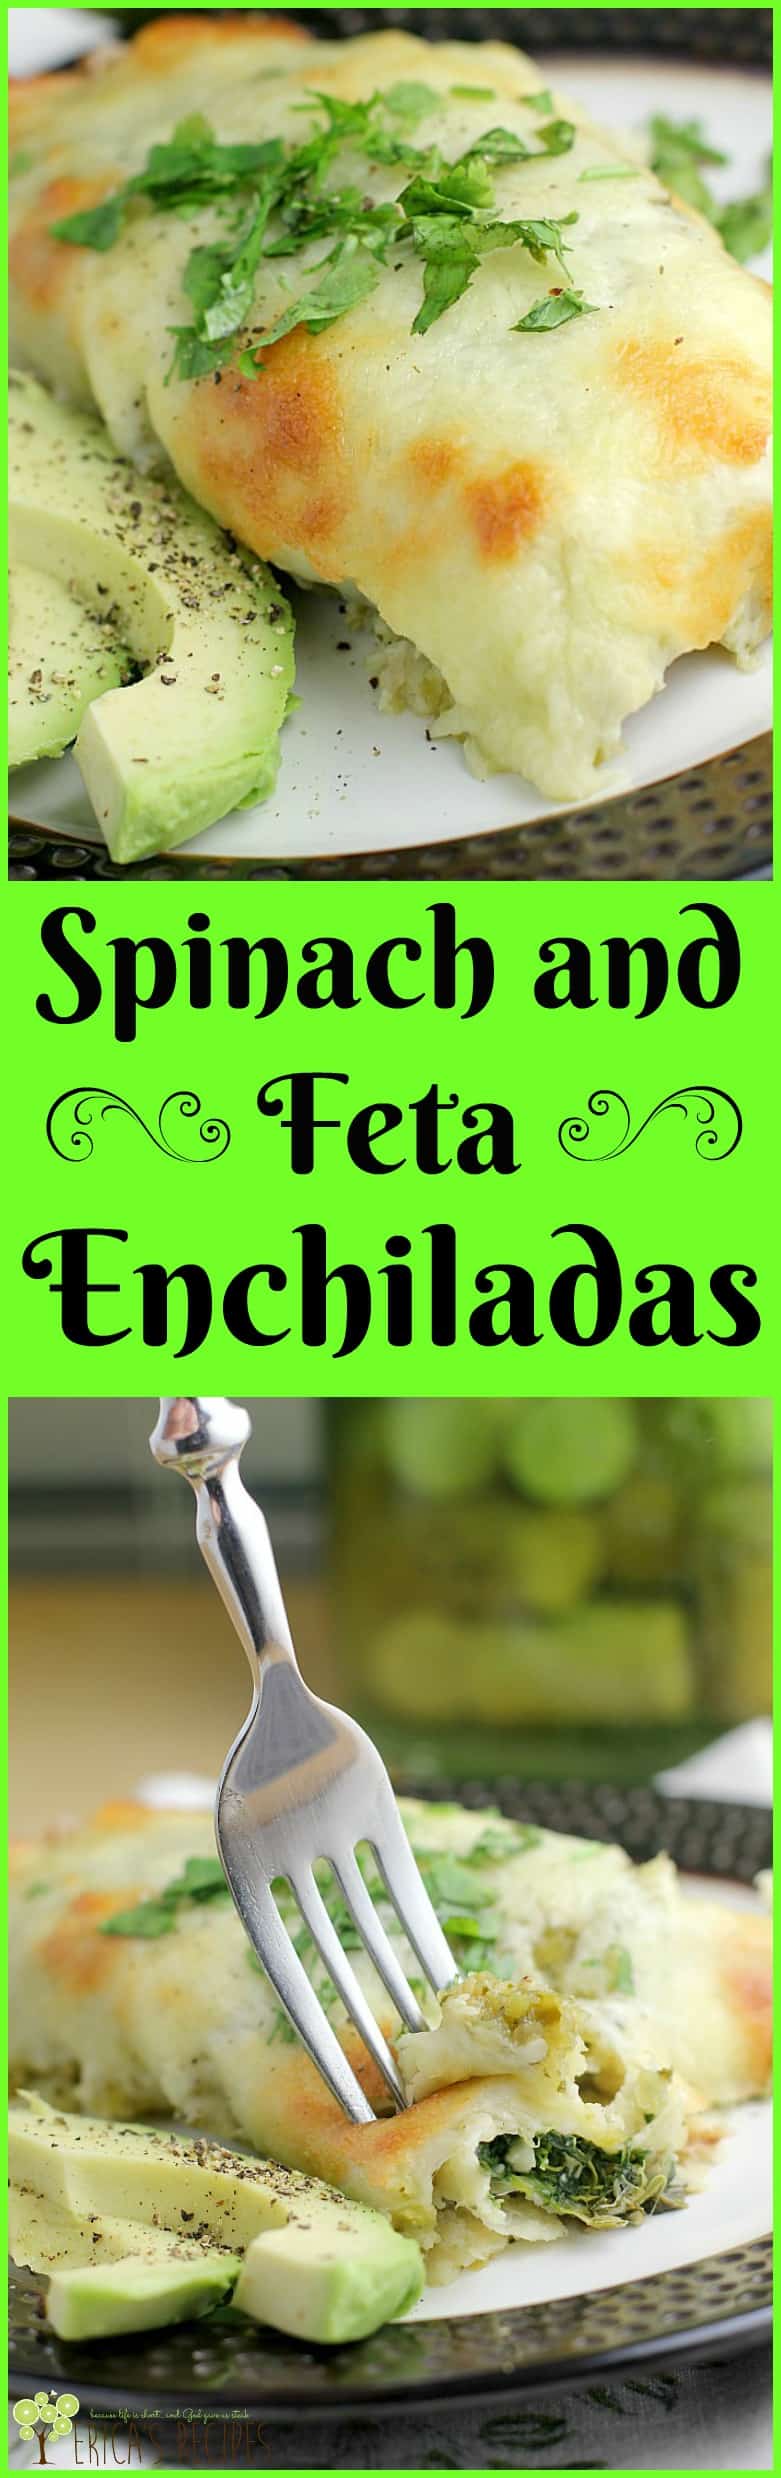 Spinach and Feta Enchiladas http://wp.me/p4qC4h-3yj